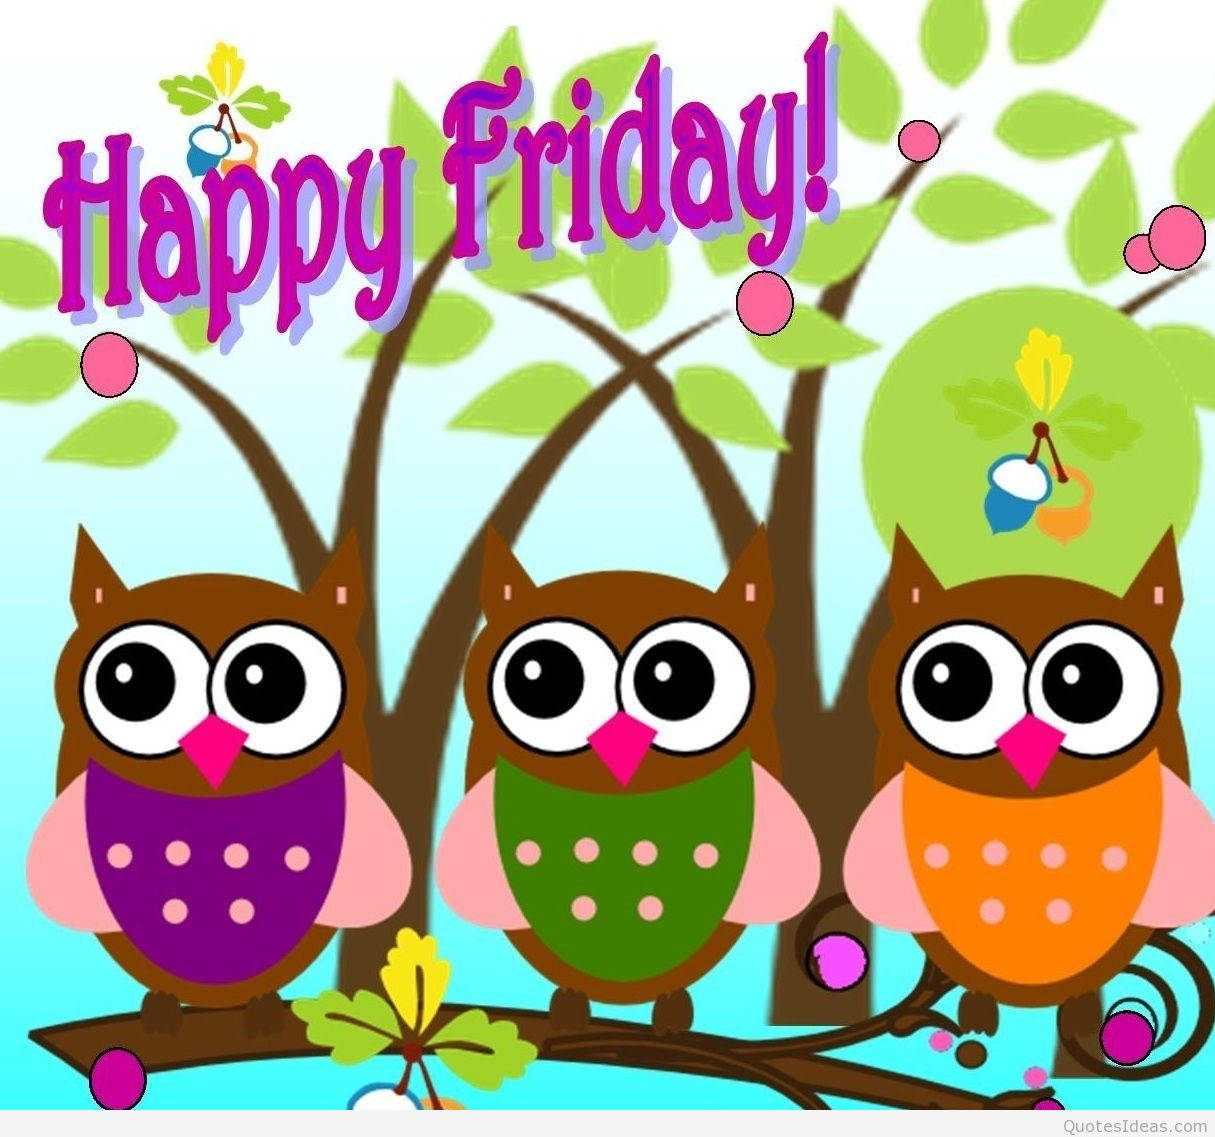 Happy Friday Owls Wallpaper